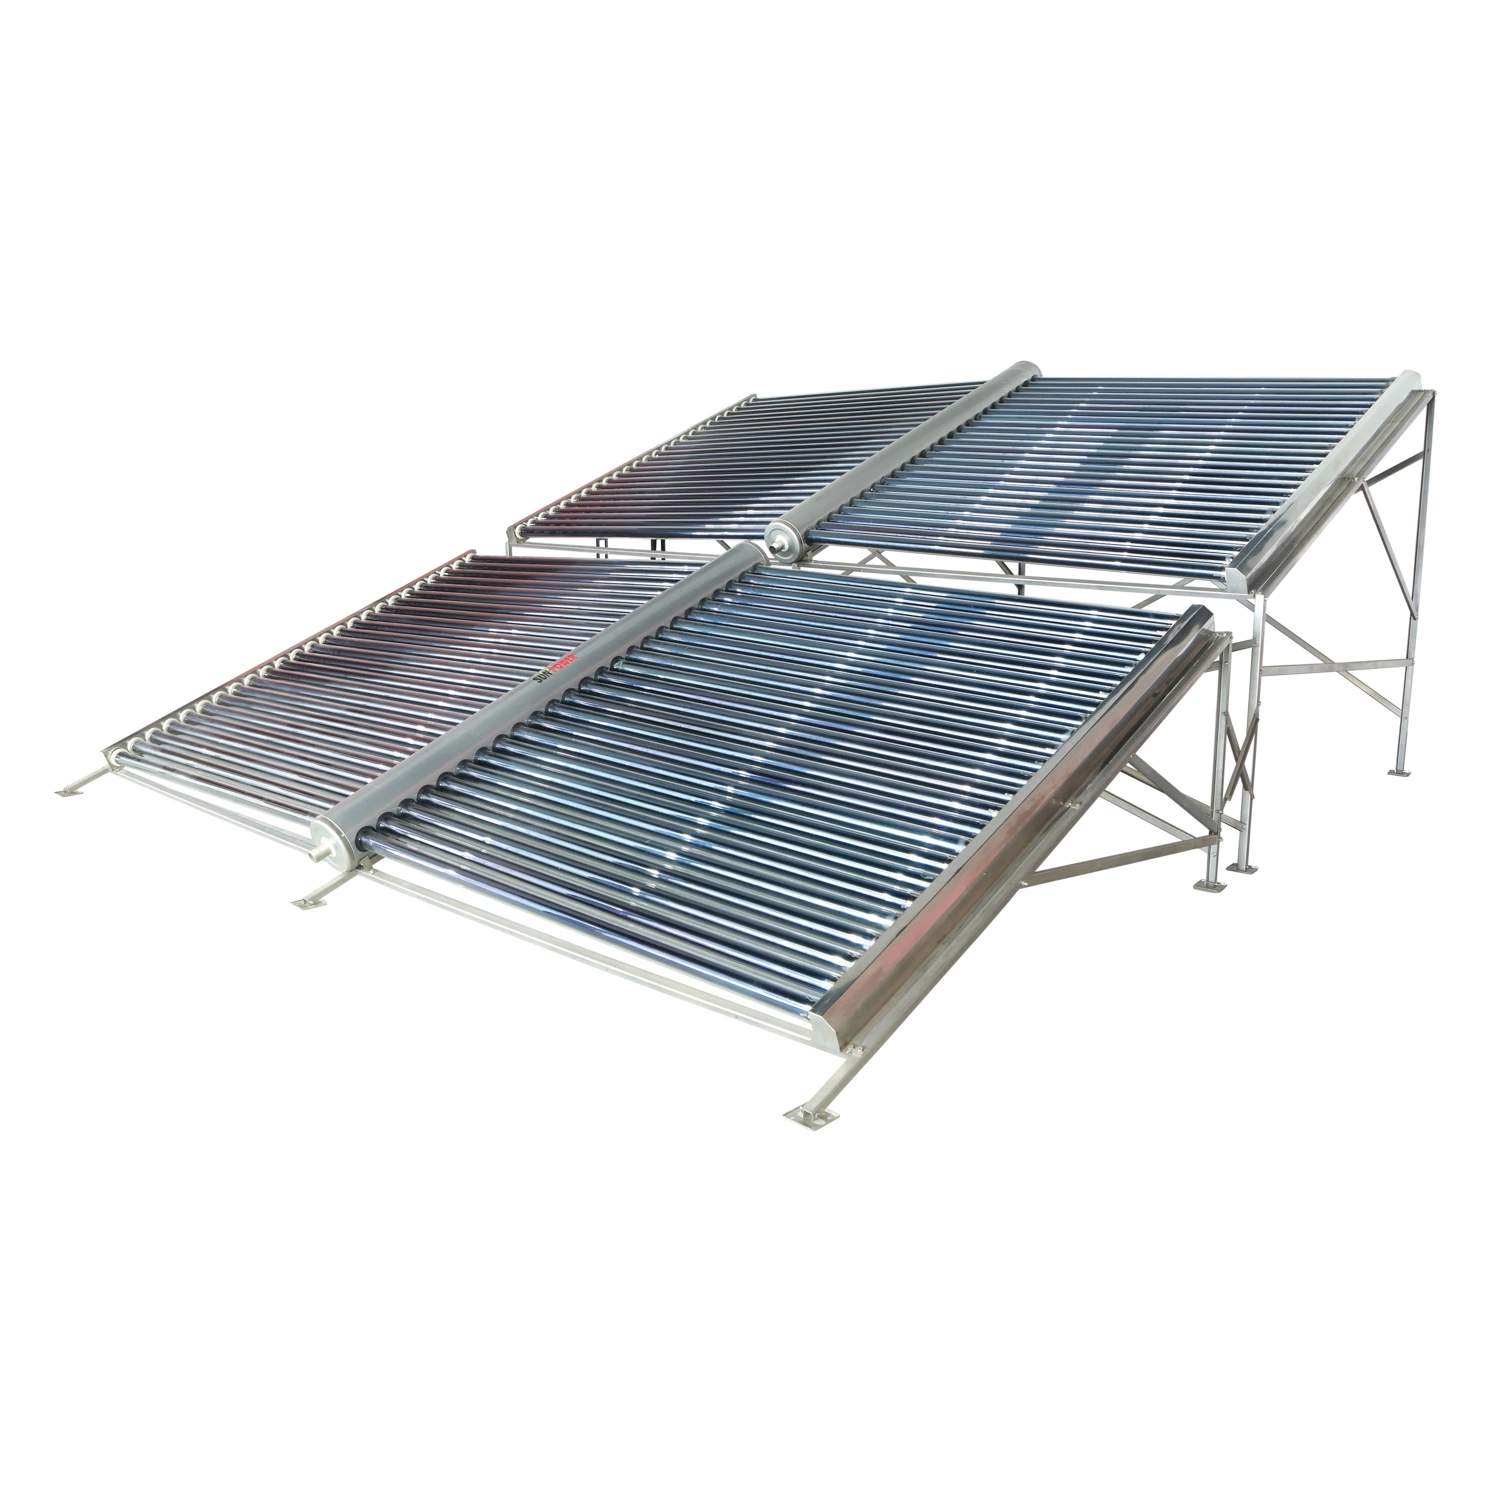 Heat Pipe Solar Water Heater Project